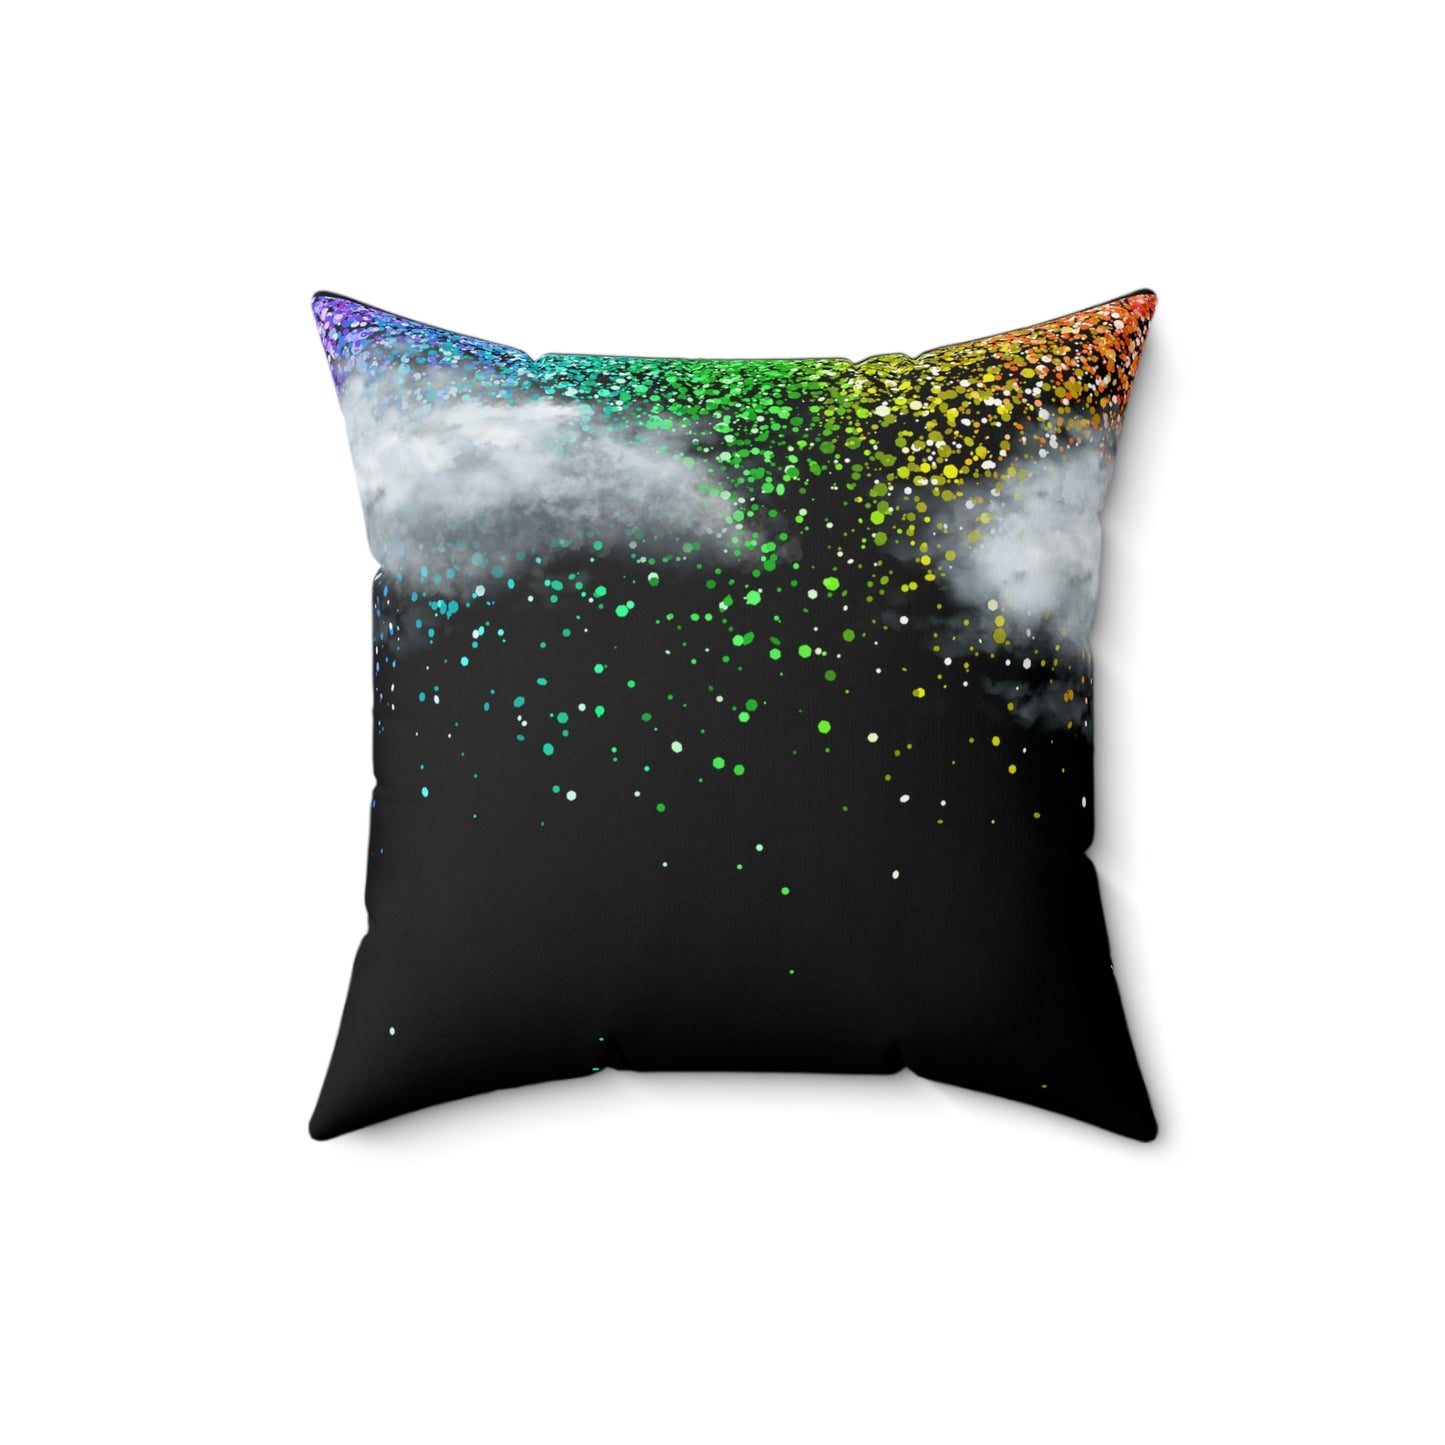 Rainbow, Raining Rainbow, Clouds, Sparkles- Square Black Pillow